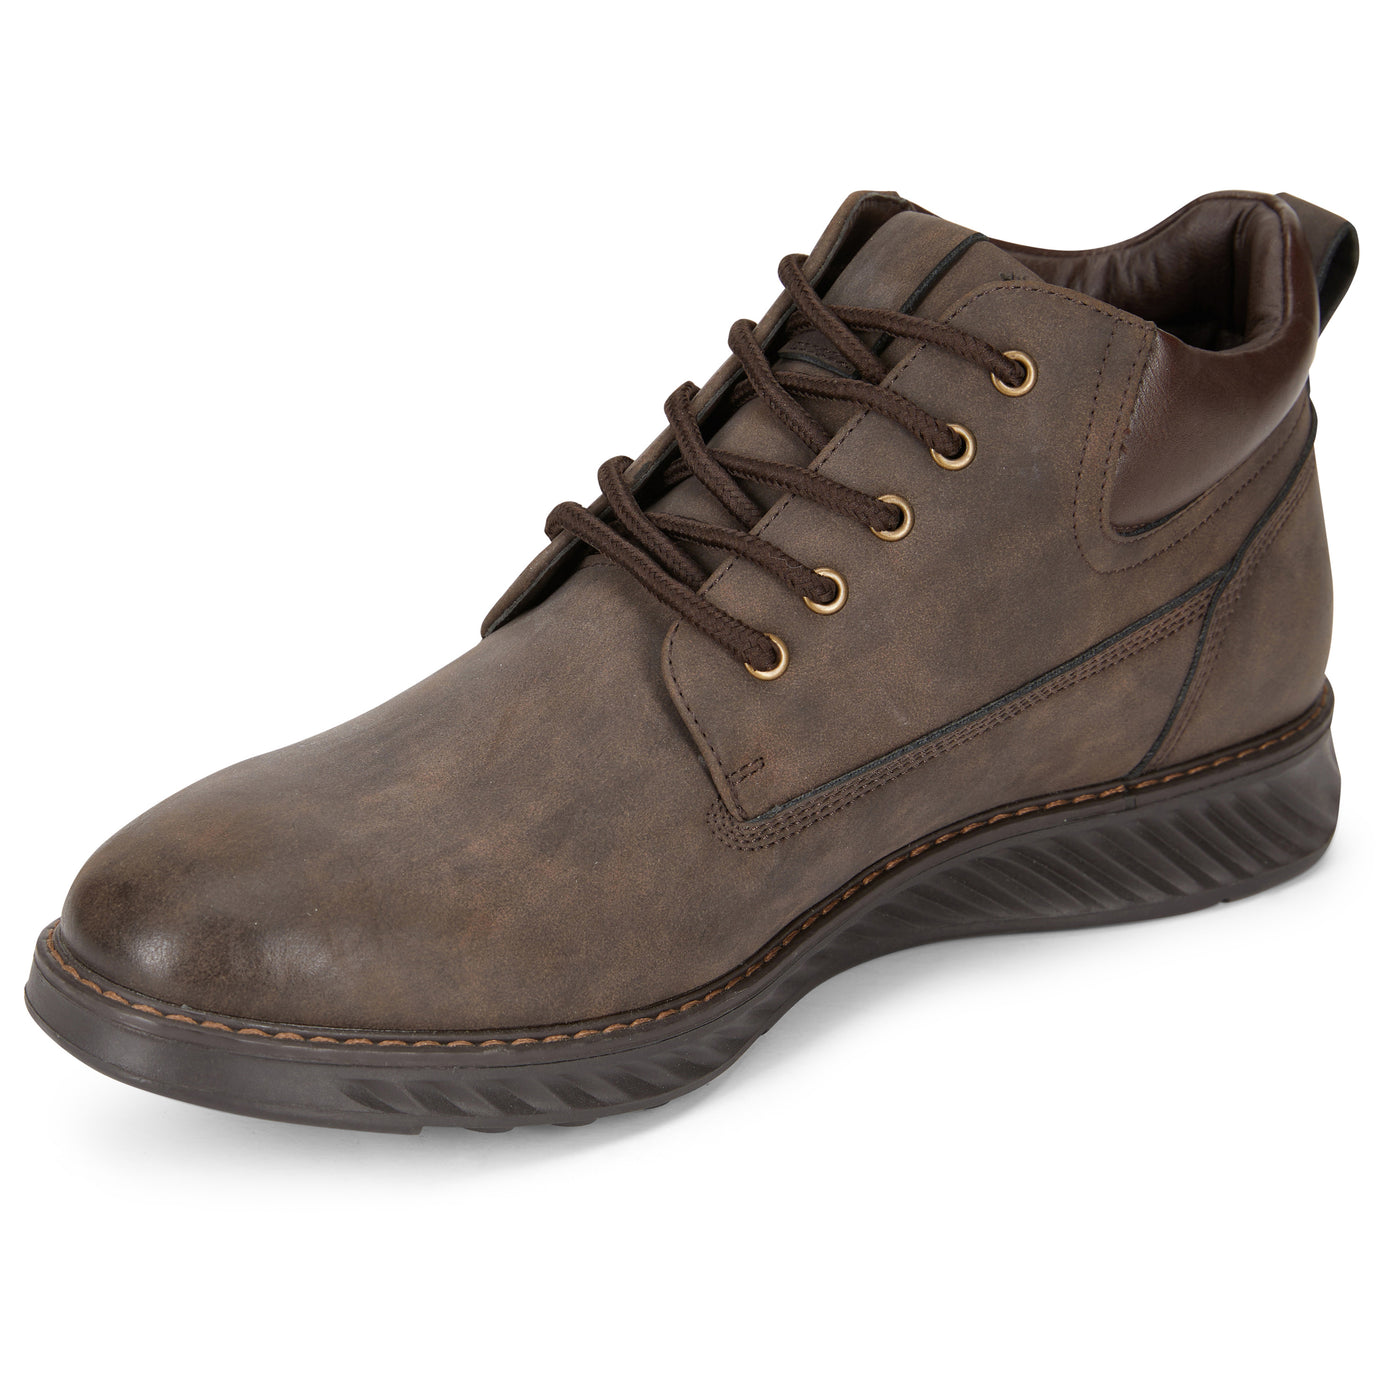 Van Heusen Men's Gainell Oxford Shoes